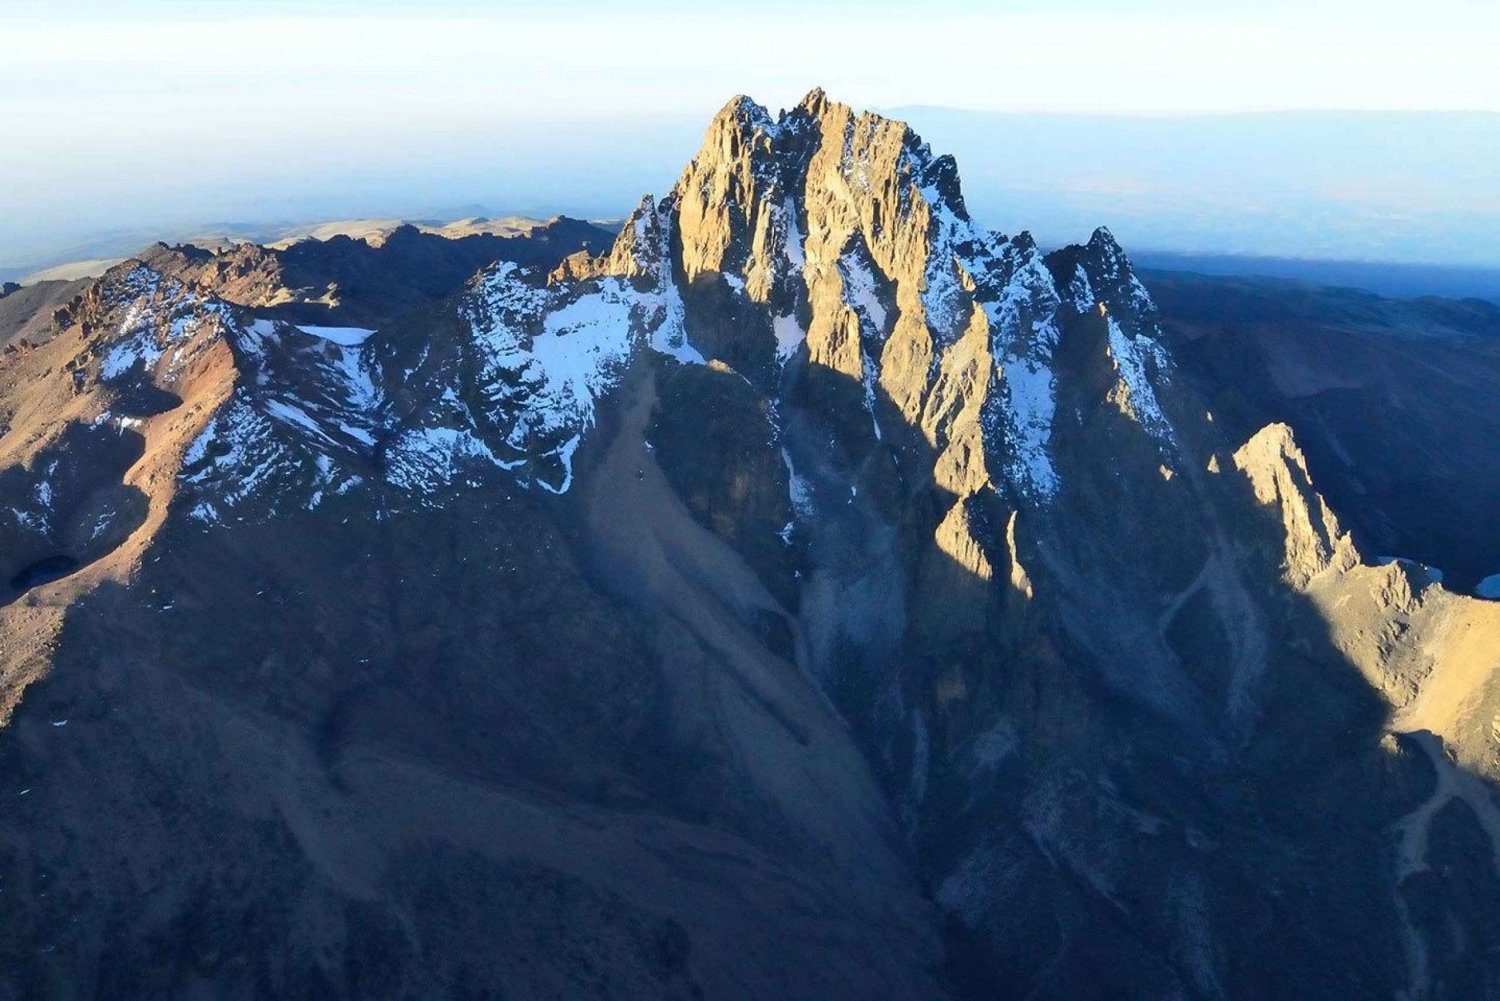 Mount Kenya: 5-Day Hike Via Chogoria Route